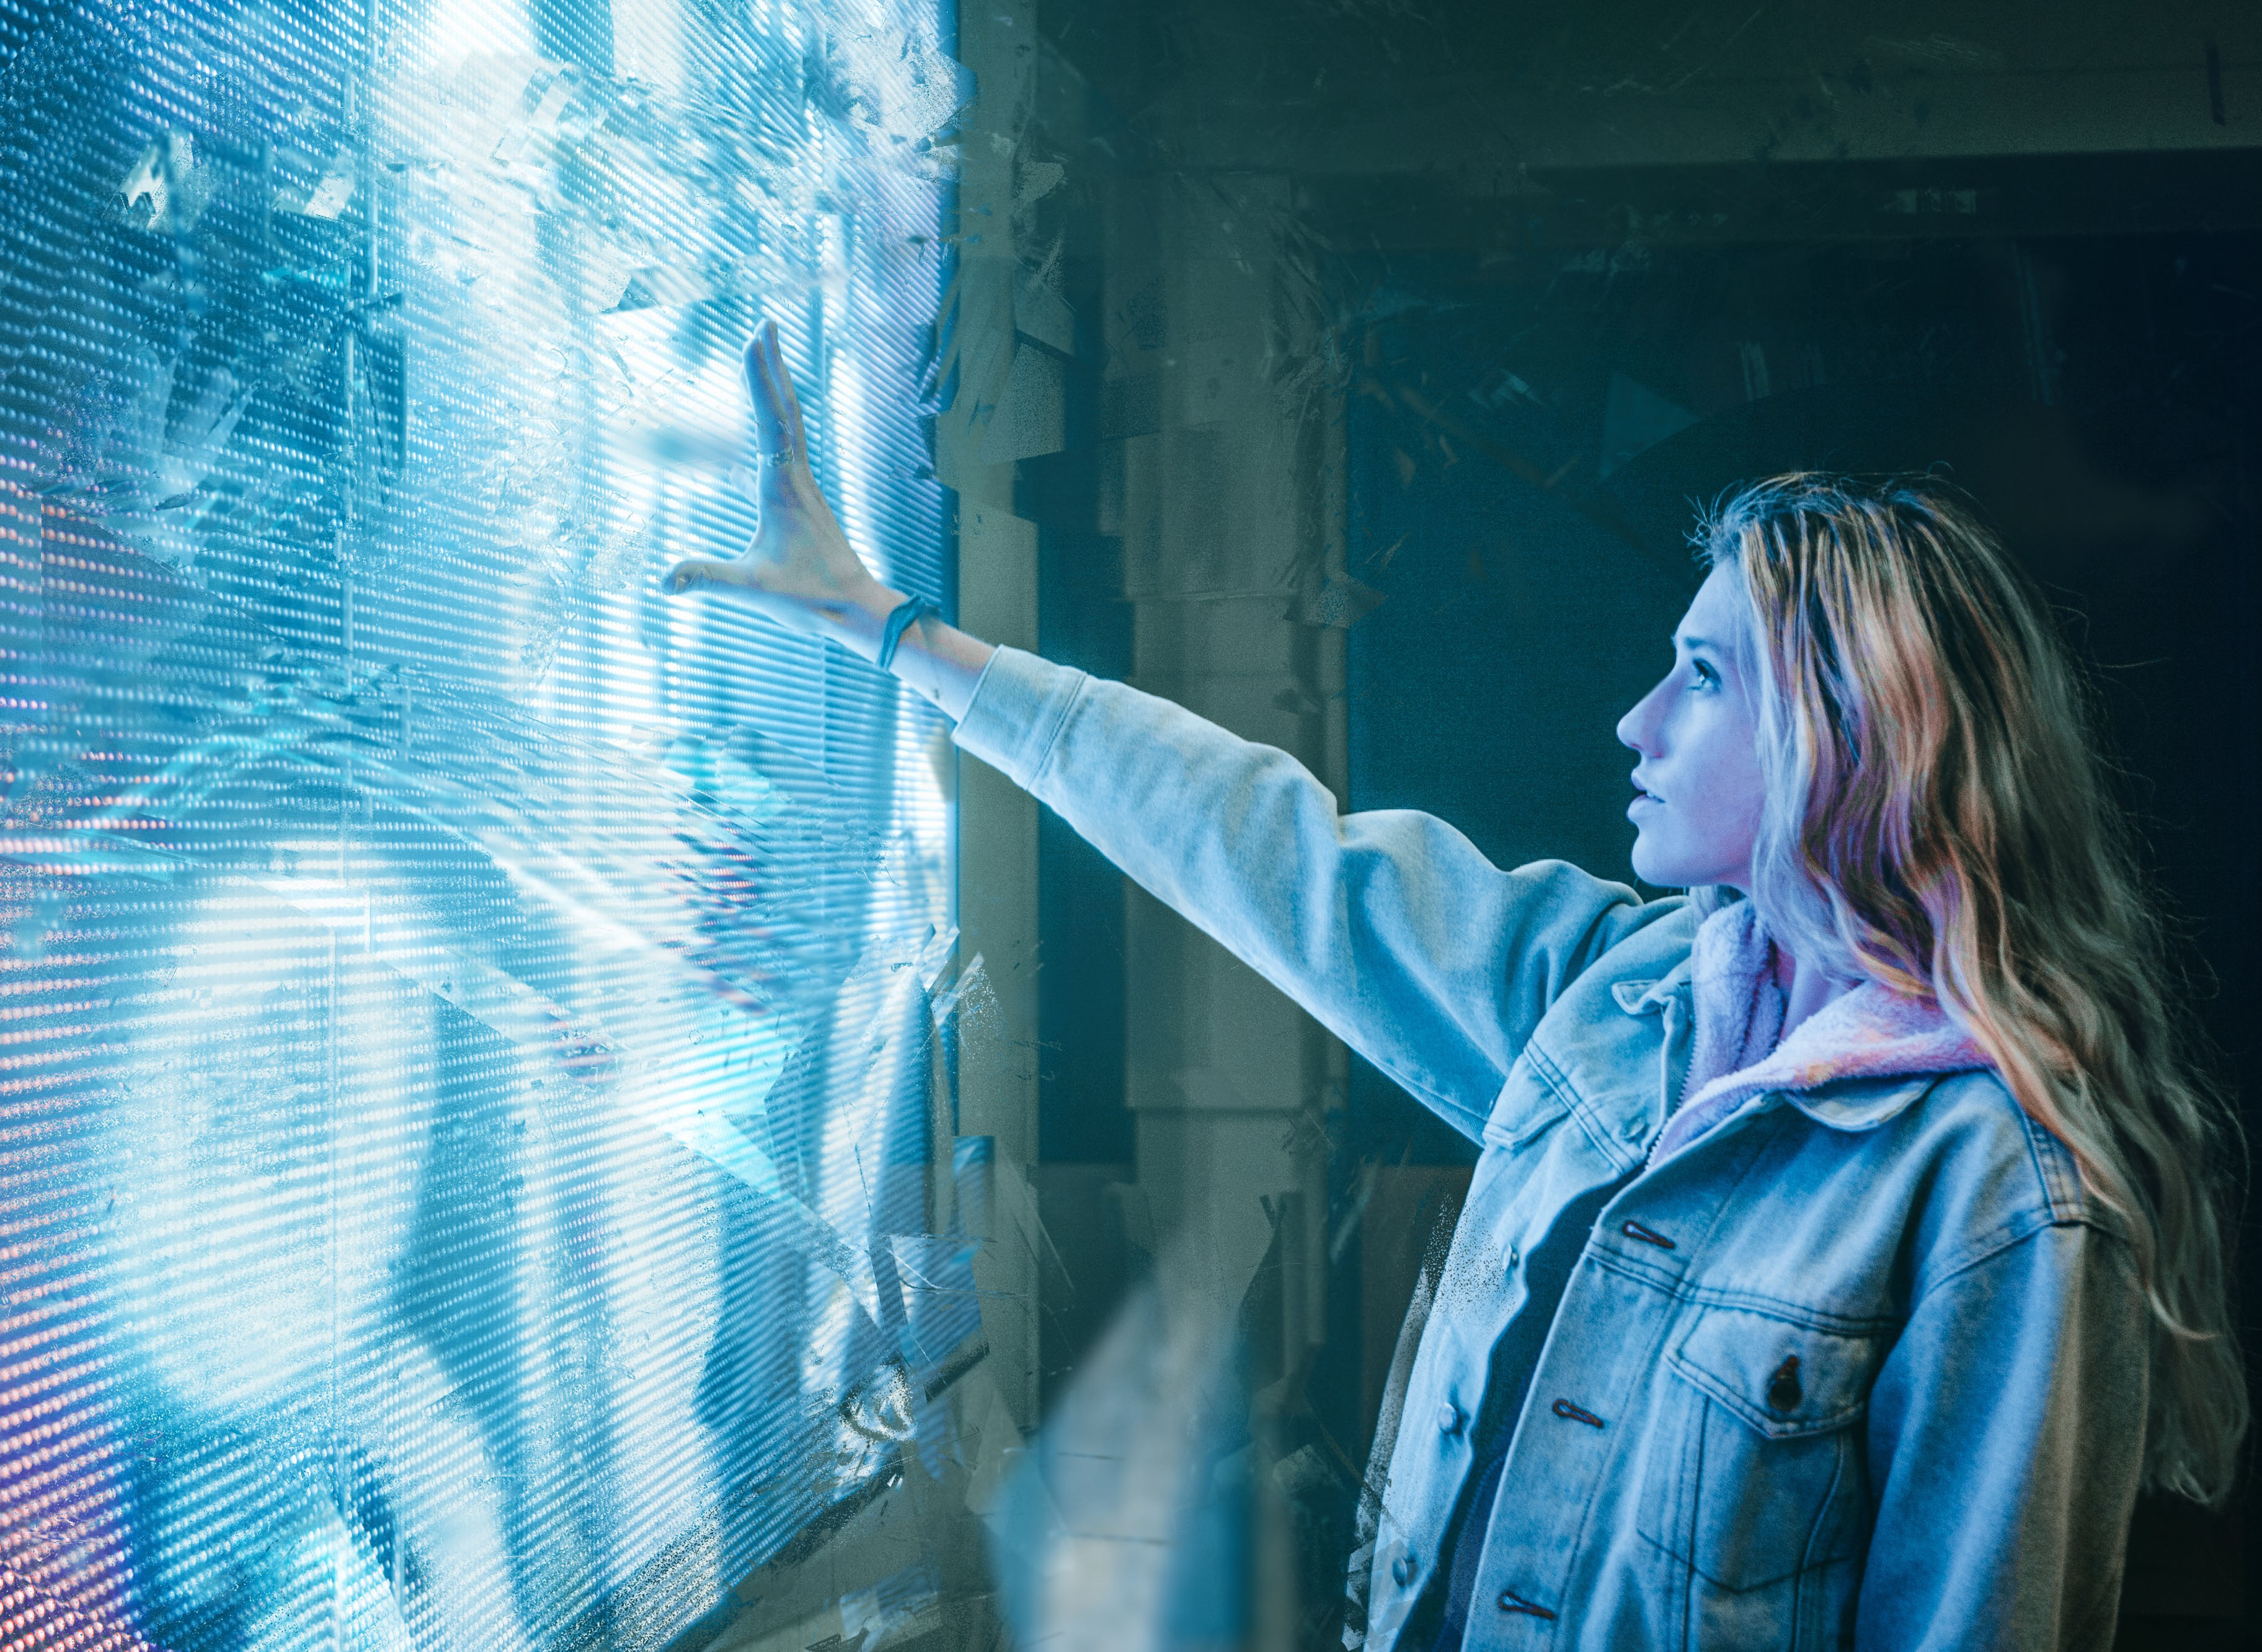 woman placing hand on futuristic-looking wall-sizedmonitor